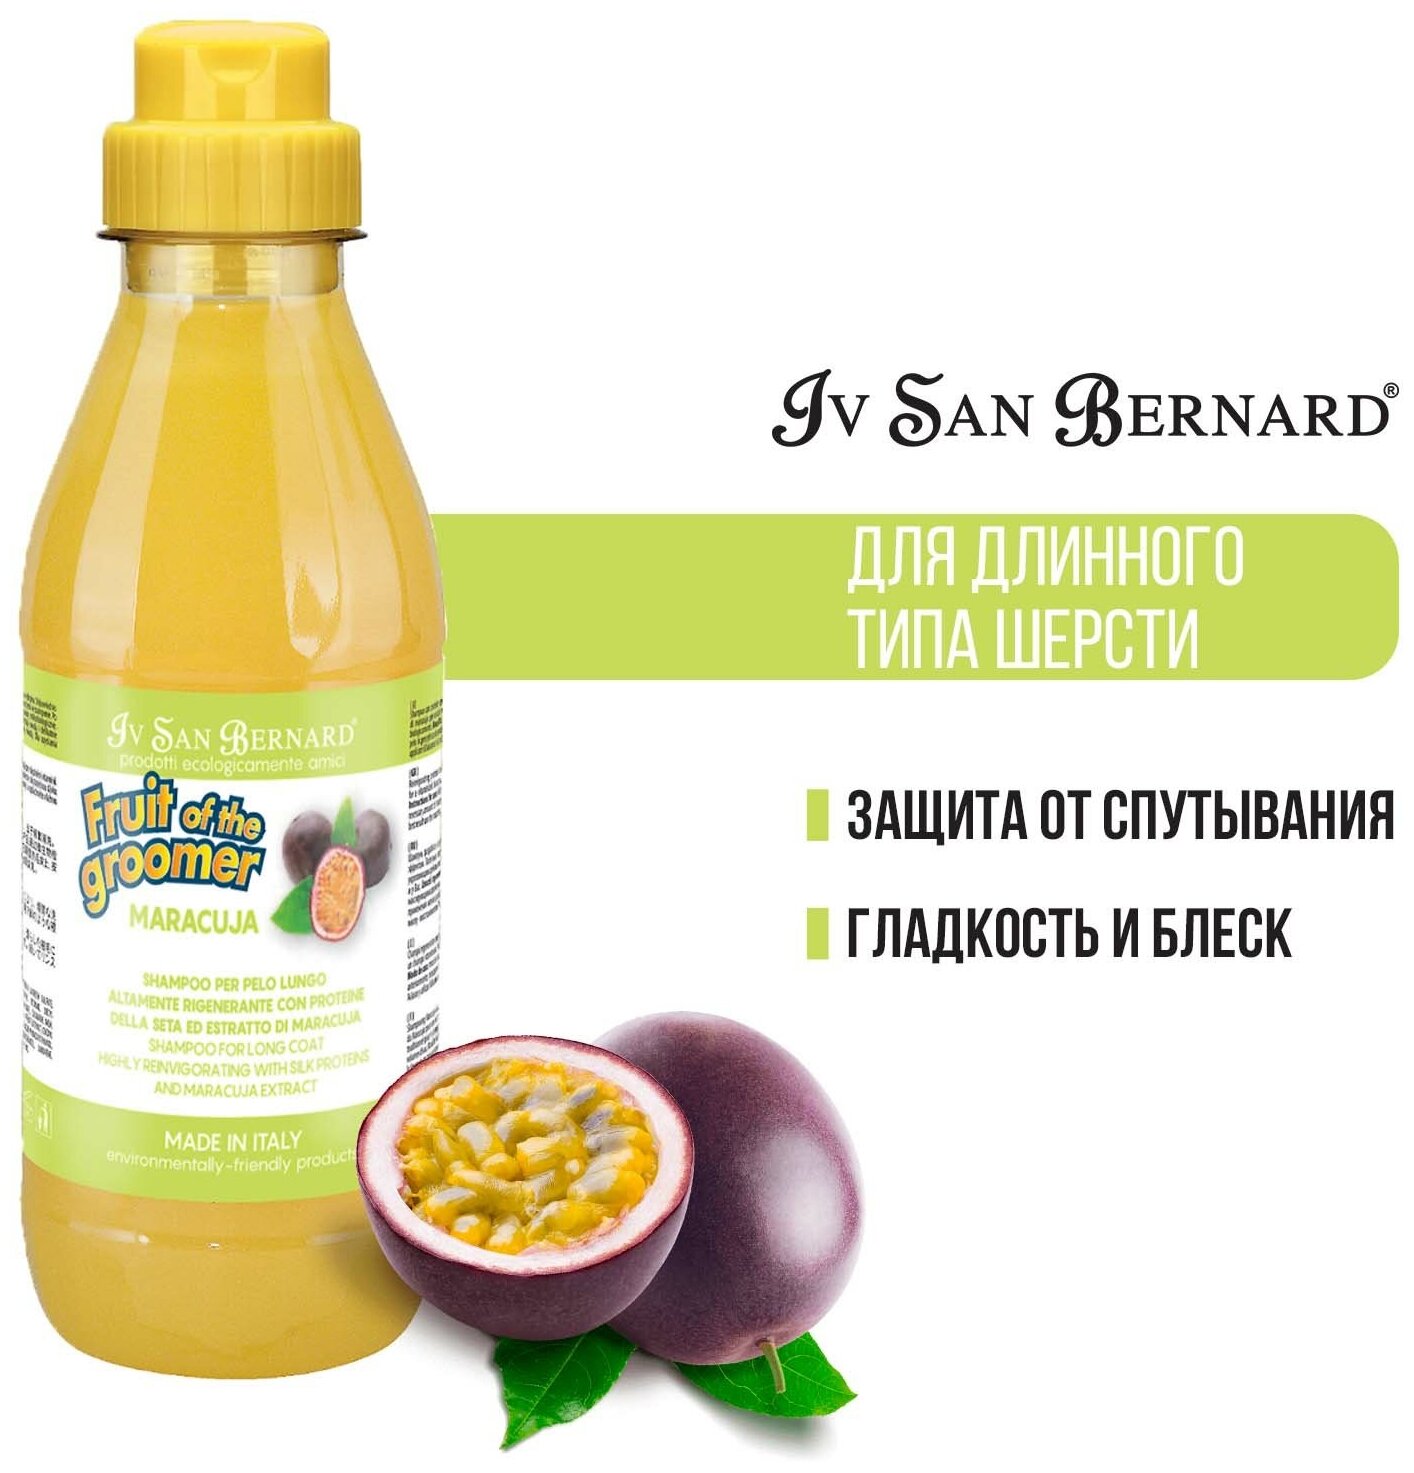 Iv San Bernard Fruit of the Groomer Maracuja Шампунь для длинной шерсти с протеинами 500 мл